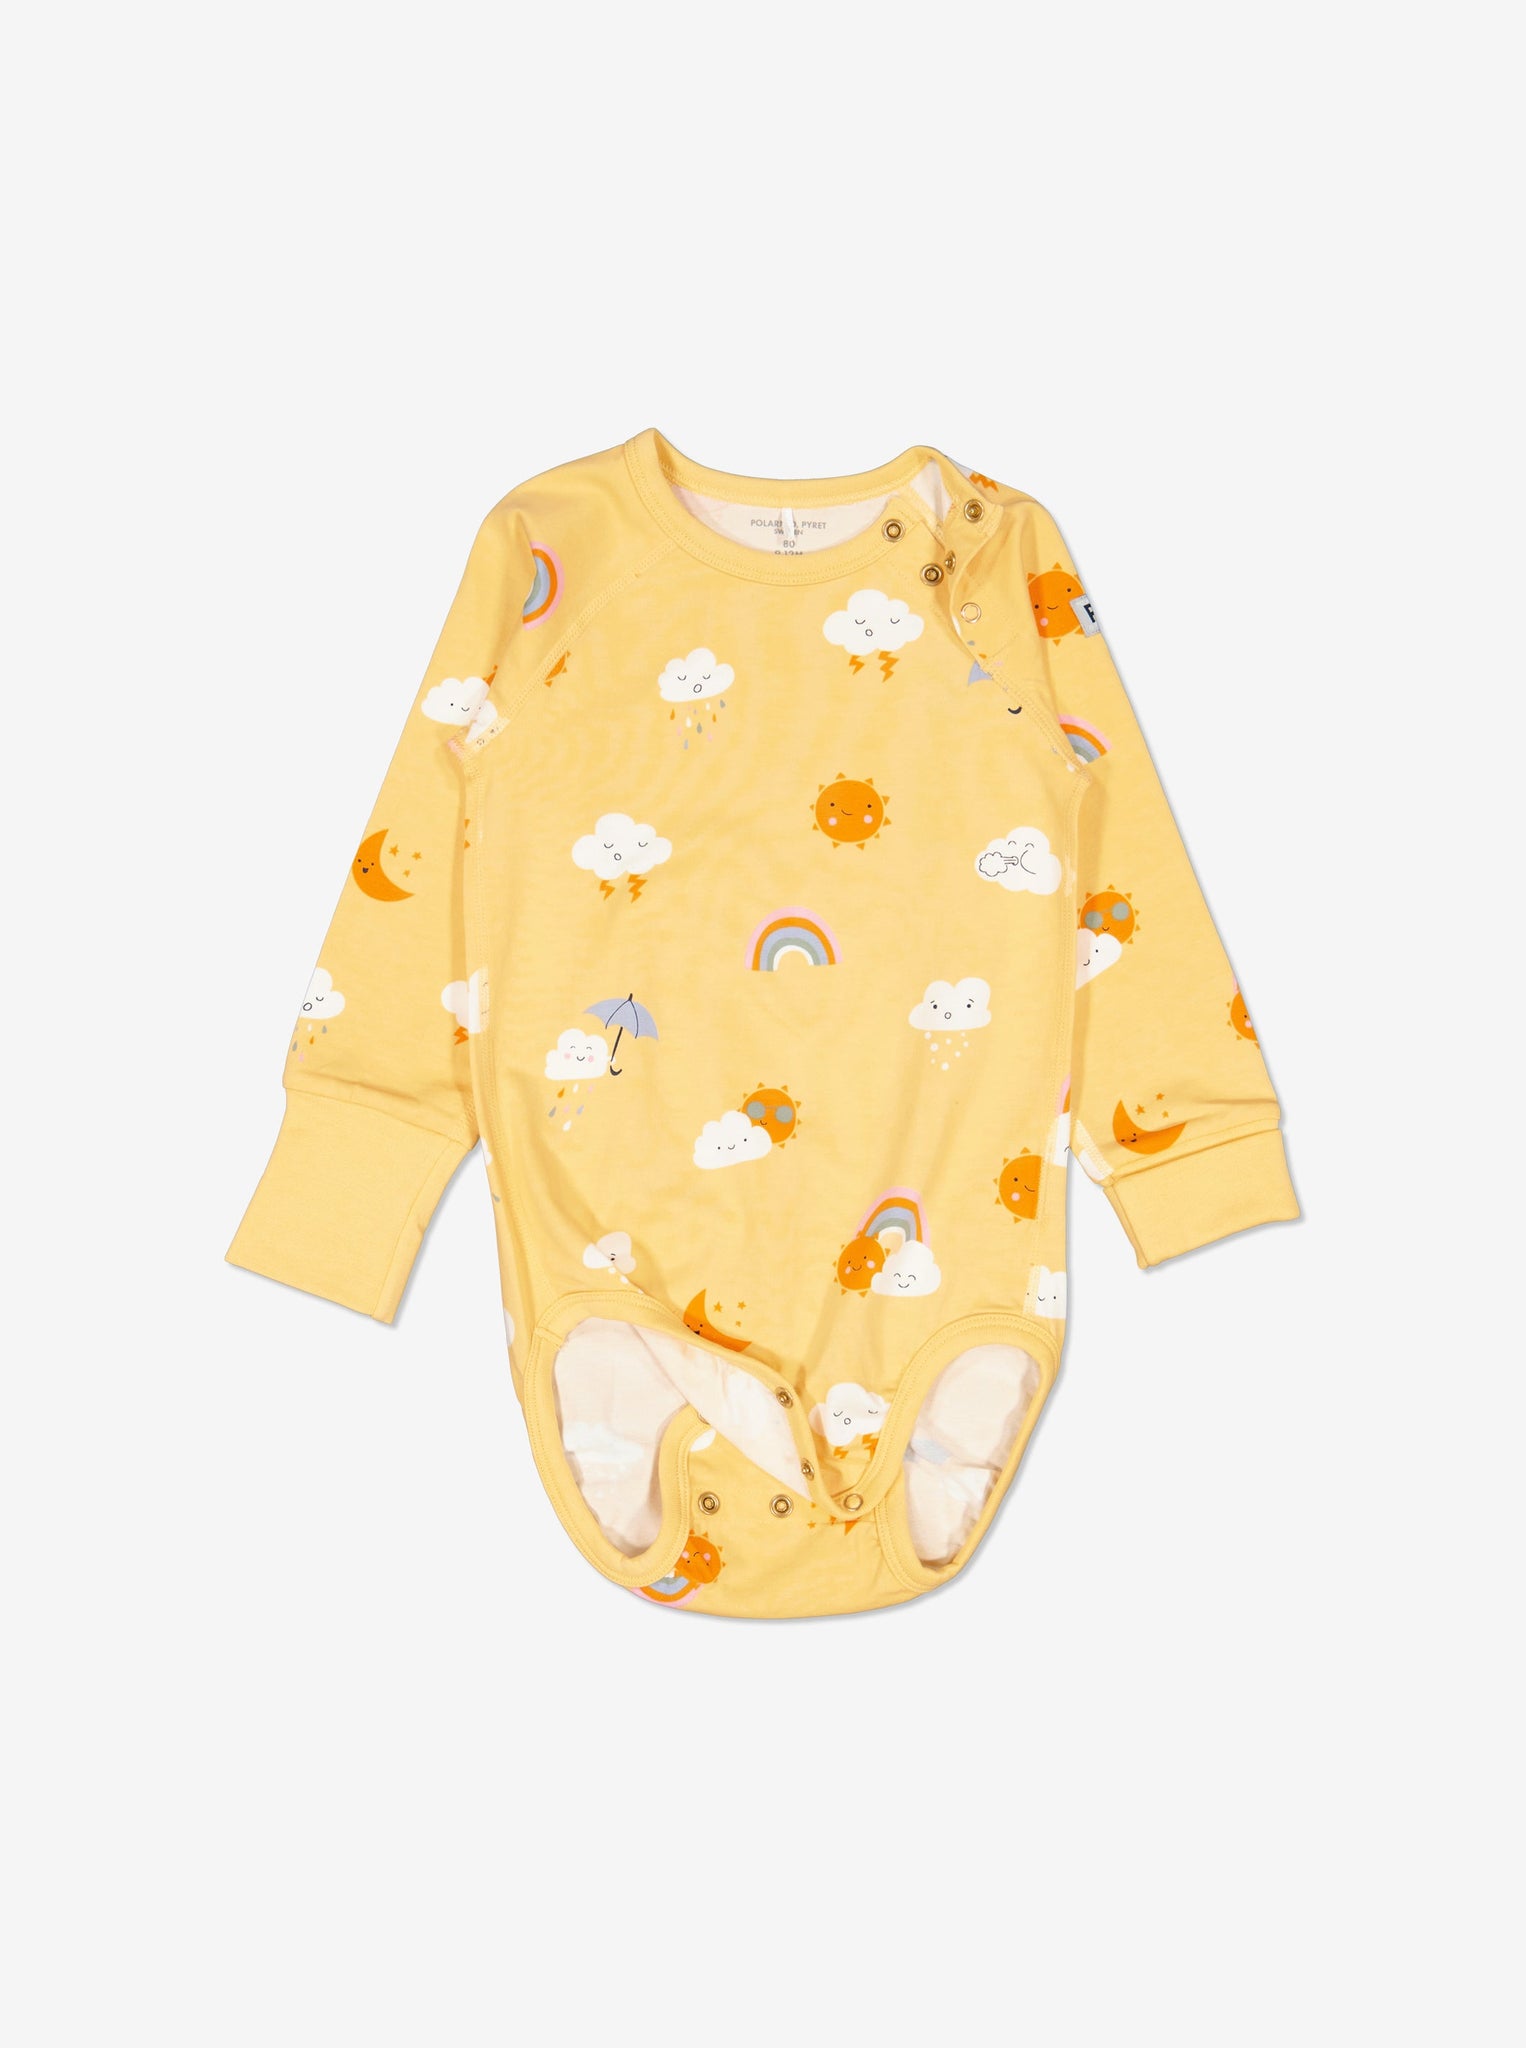  Rainbow Newborn Babygrow from Polarn O. Pyret Kidswear. Made using environmentally friendly materials.